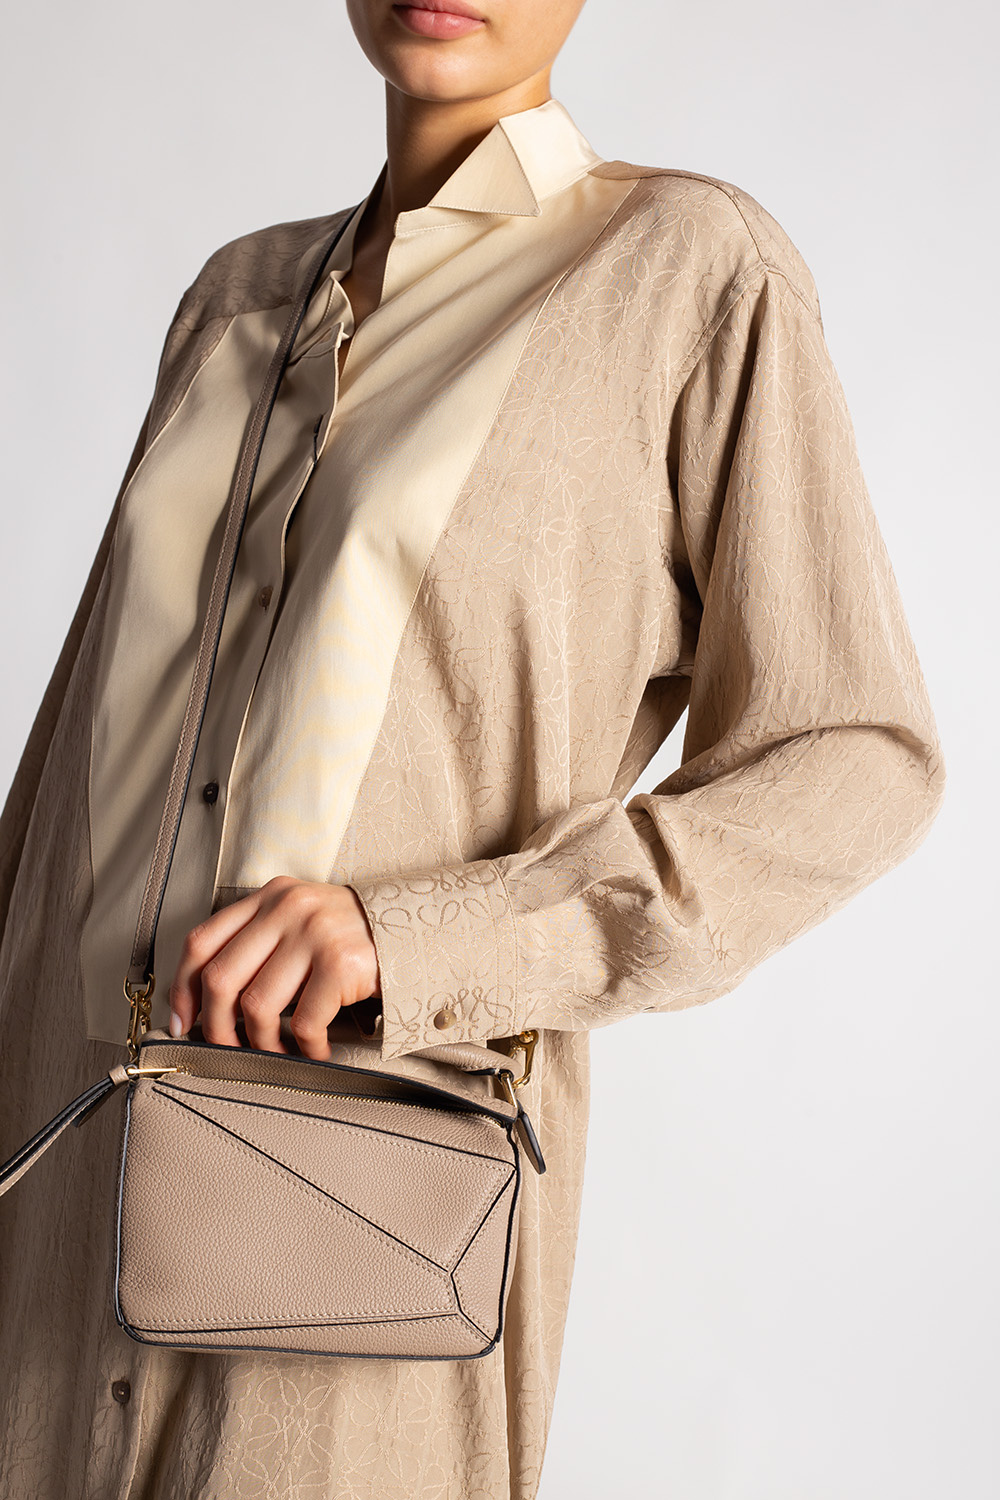 Loewe Women's 'Puzzle Mini' Shoulder Bag - Brown - Shoulder Bags